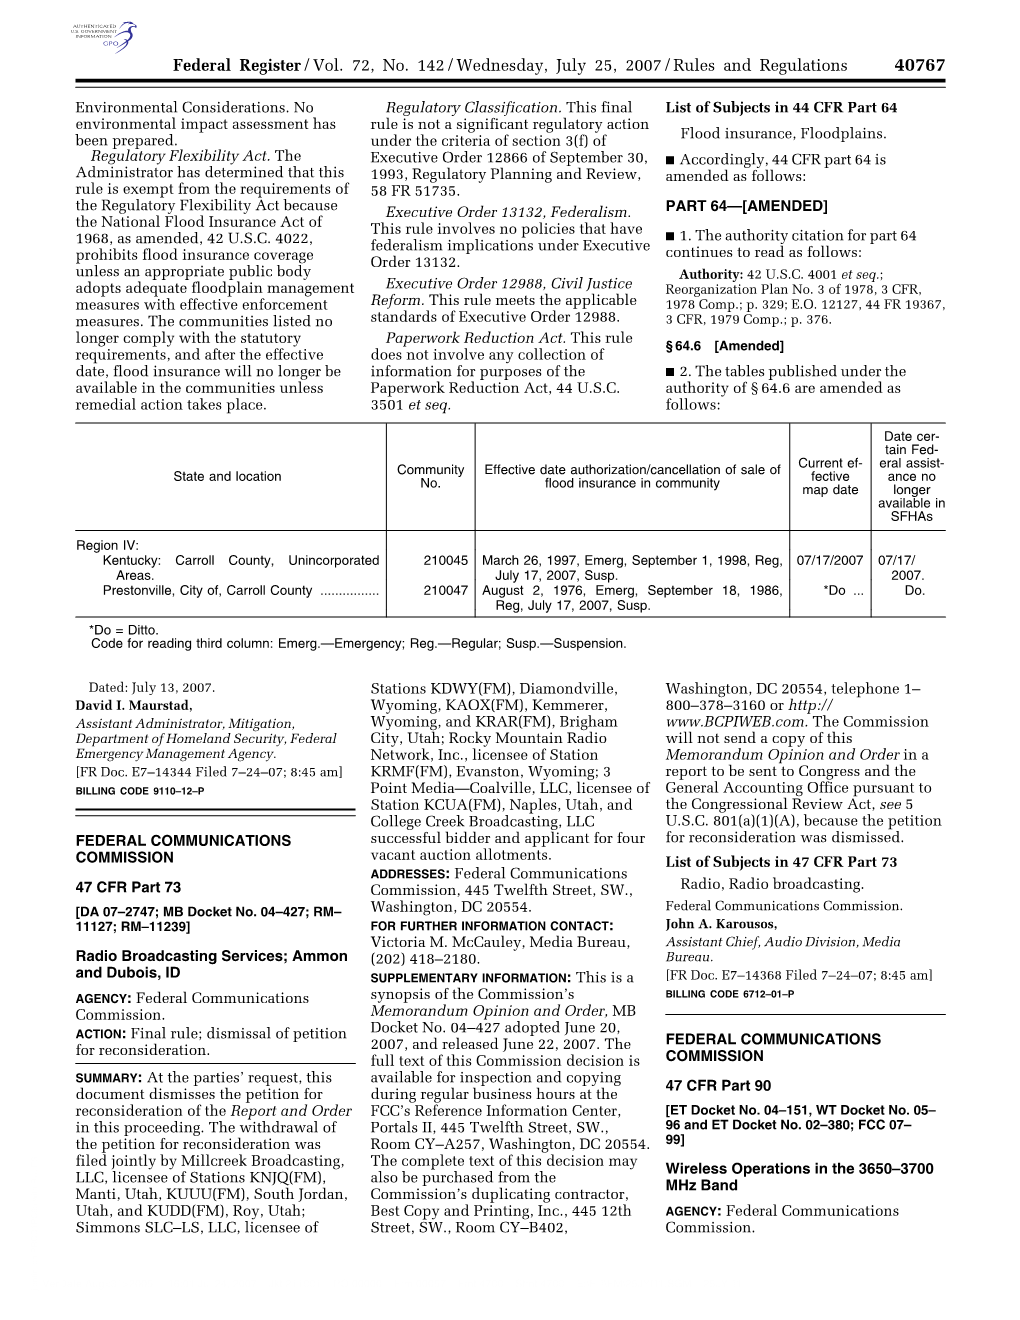 Federal Register/Vol. 72, No. 142/Wednesday, July 25, 2007